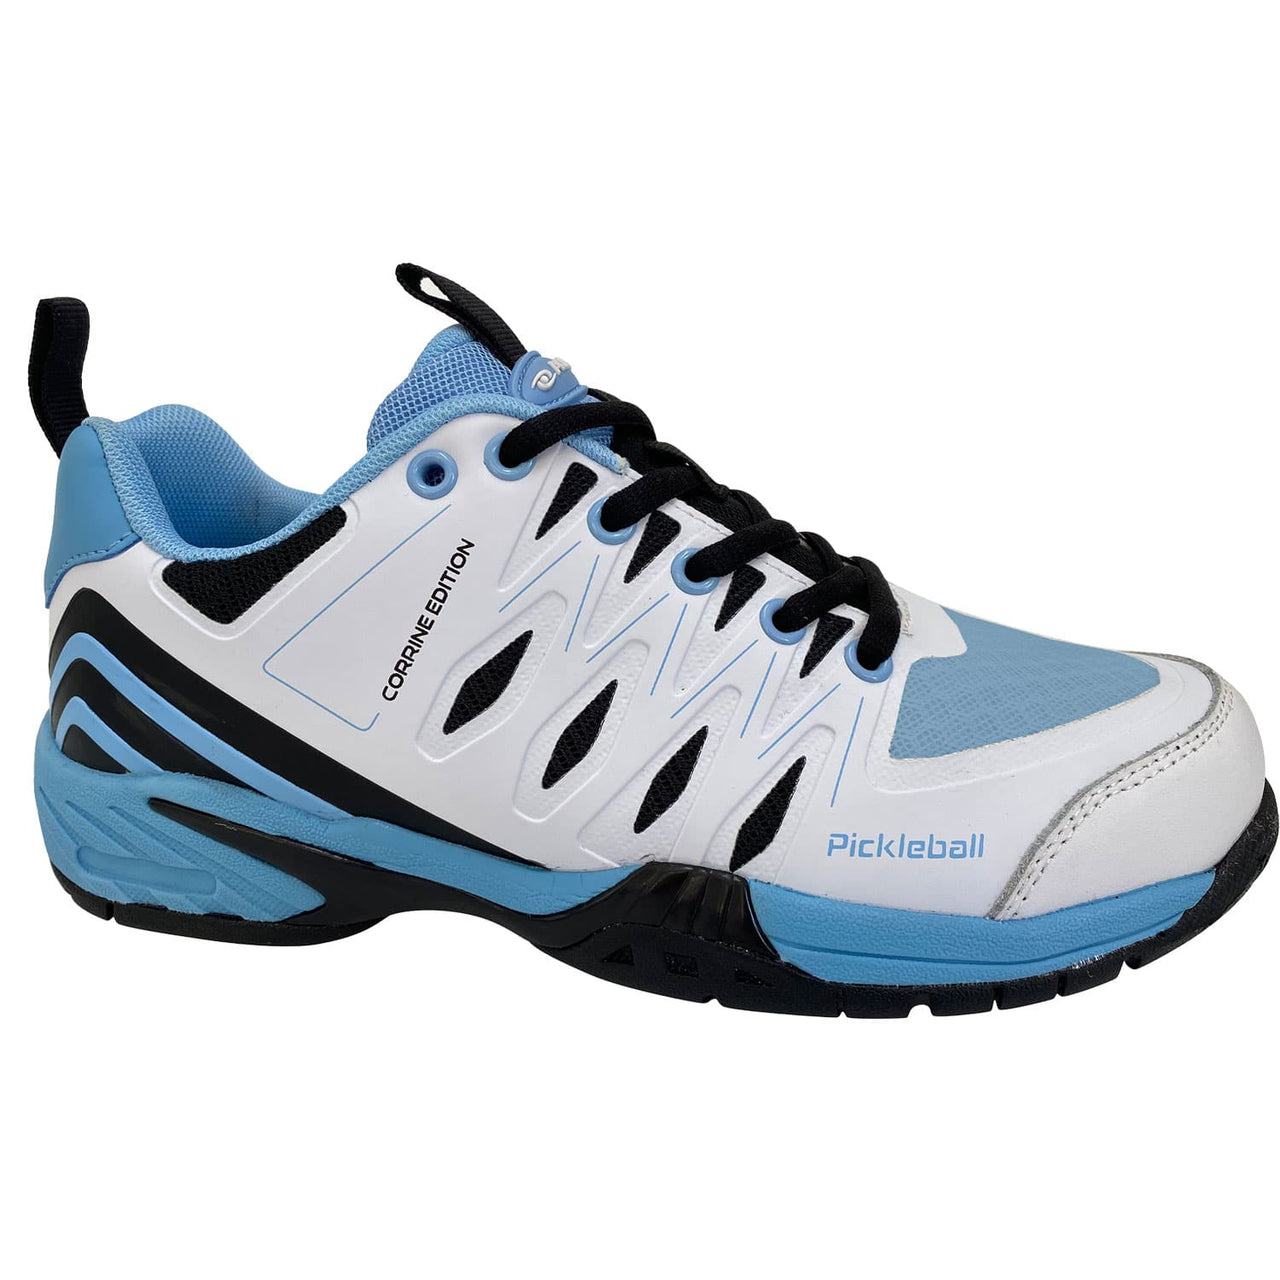 Acacia Sports - The "CORRINE" Signature Edition Pro Shoes